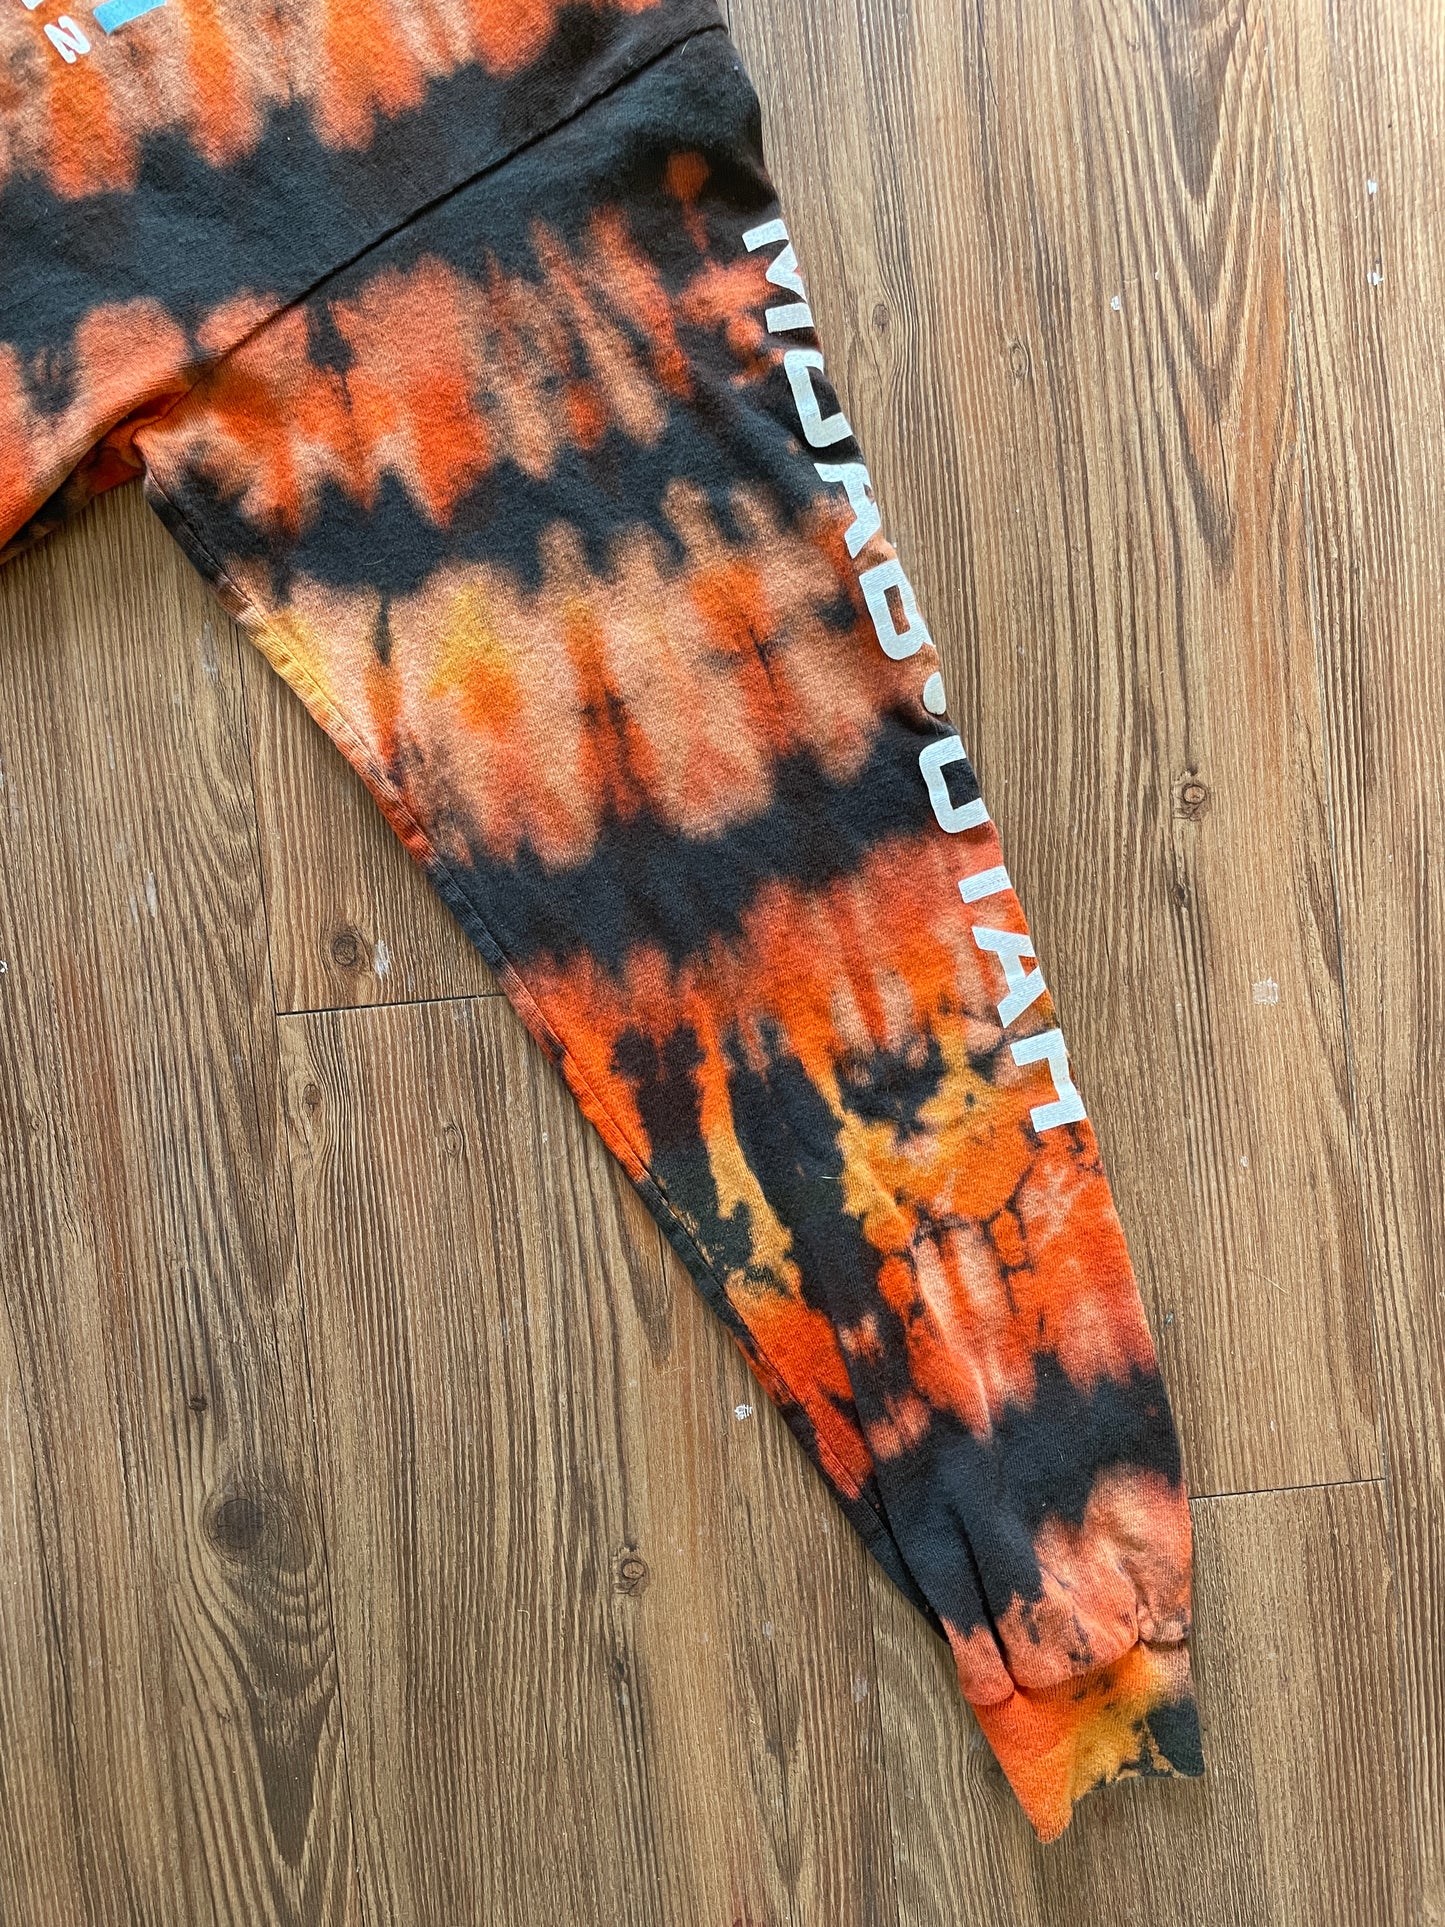 Medium/Large Men’s Moab, Utah Handmade Tie Dye T-Shirt | Black, Red, and Orange V-Pleated Tie Dye Long Sleeve